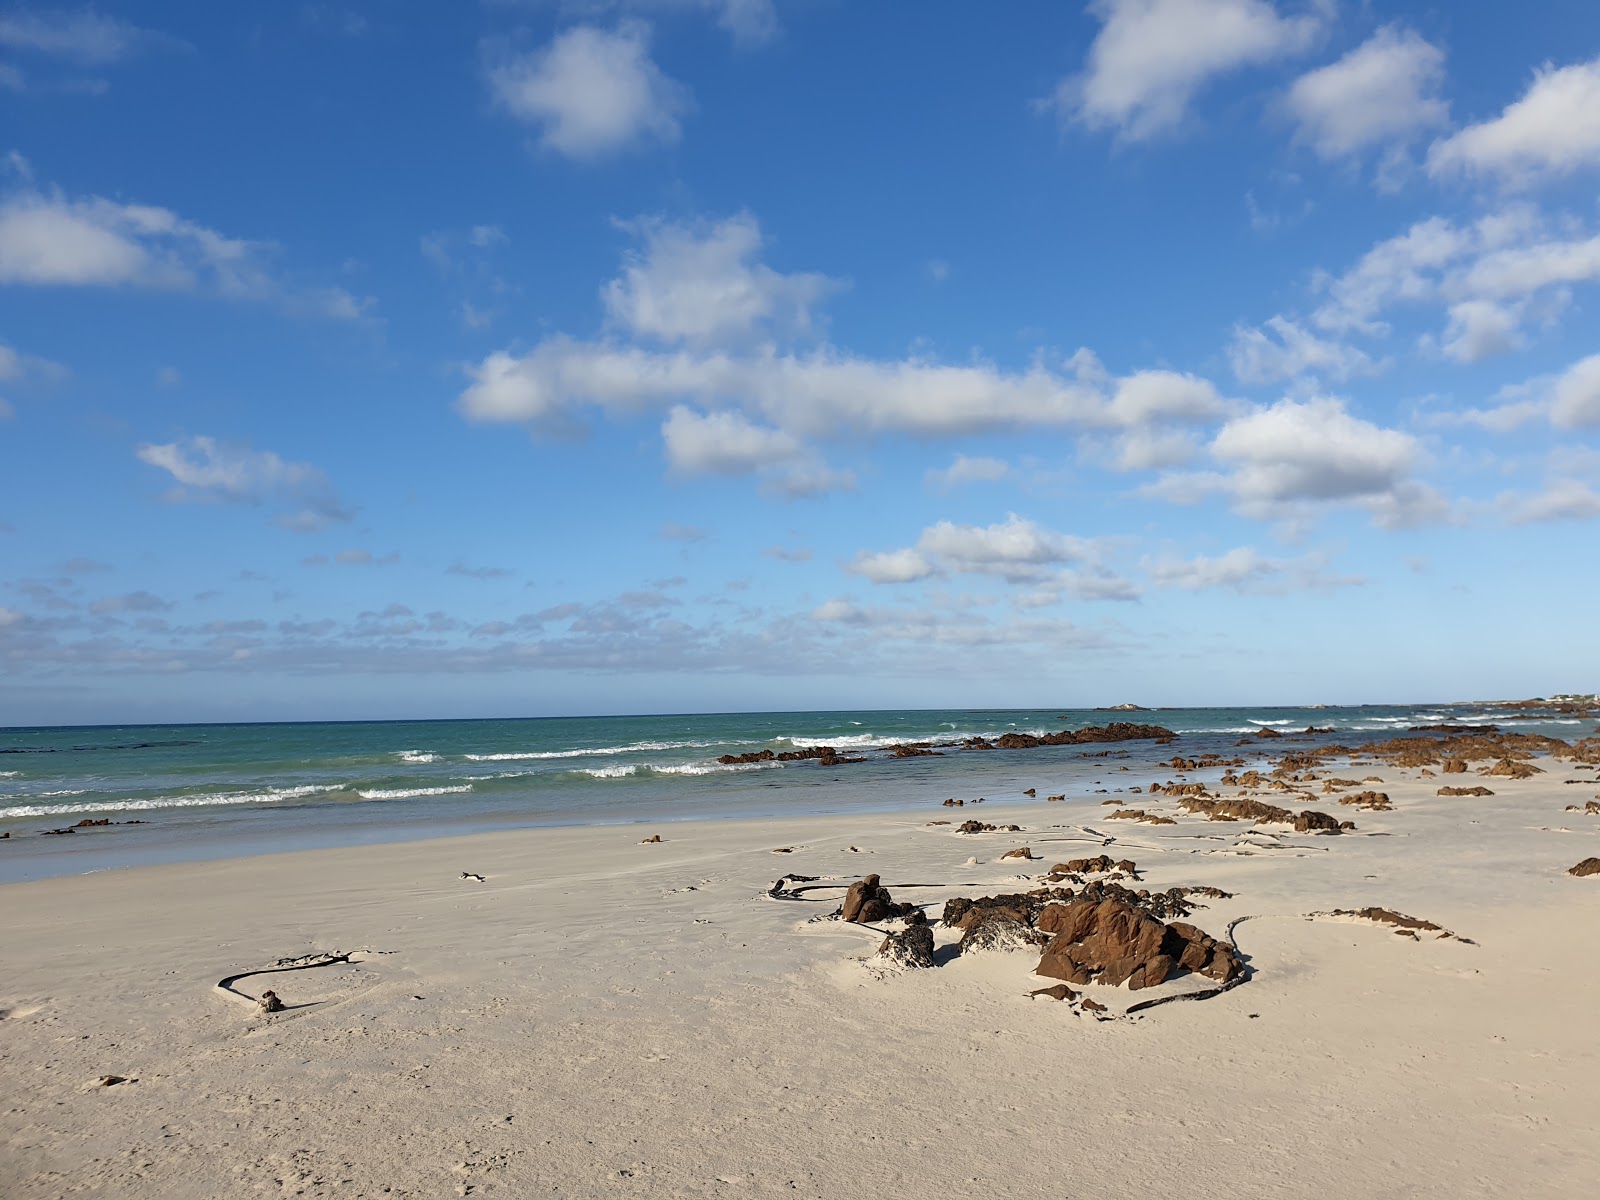 Foto di Franskraal beach con una superficie del sabbia luminosa